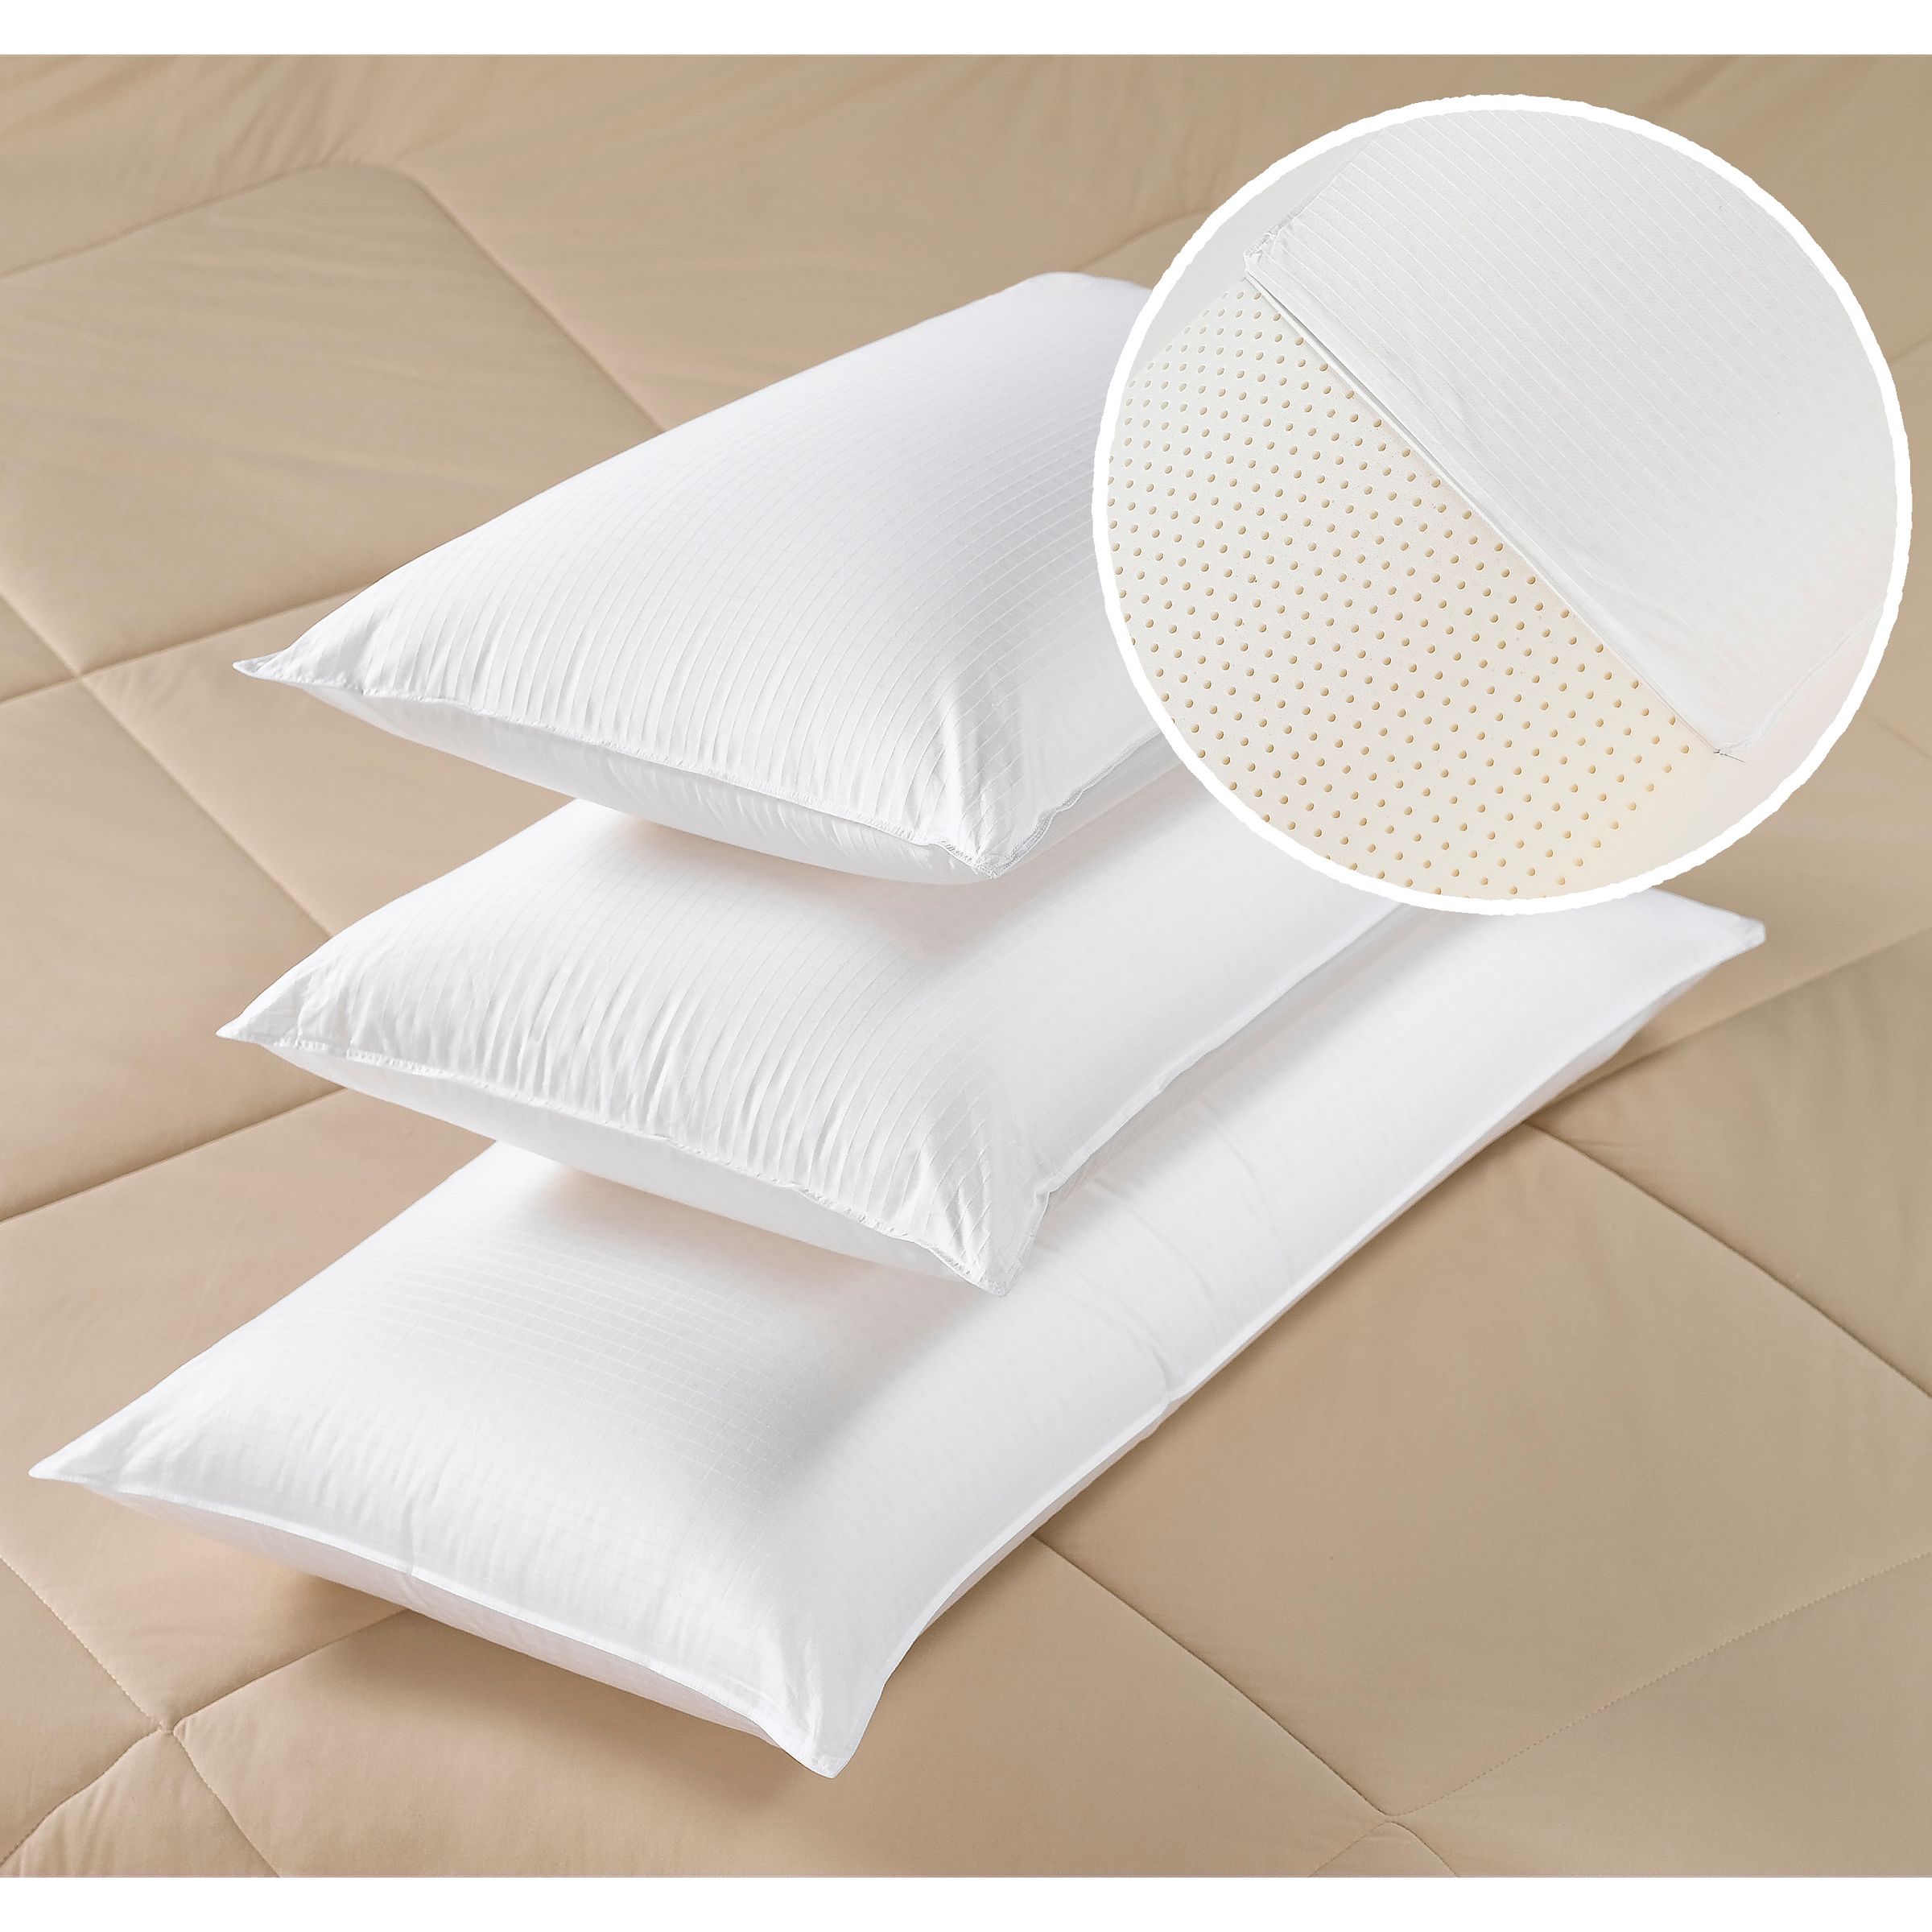 Купить подушку из тайланда. Подушка latex Foam Pillow. Подушка "латекс" (-). Латексная подушка из Тайланда. Dreamland подушка латекс.